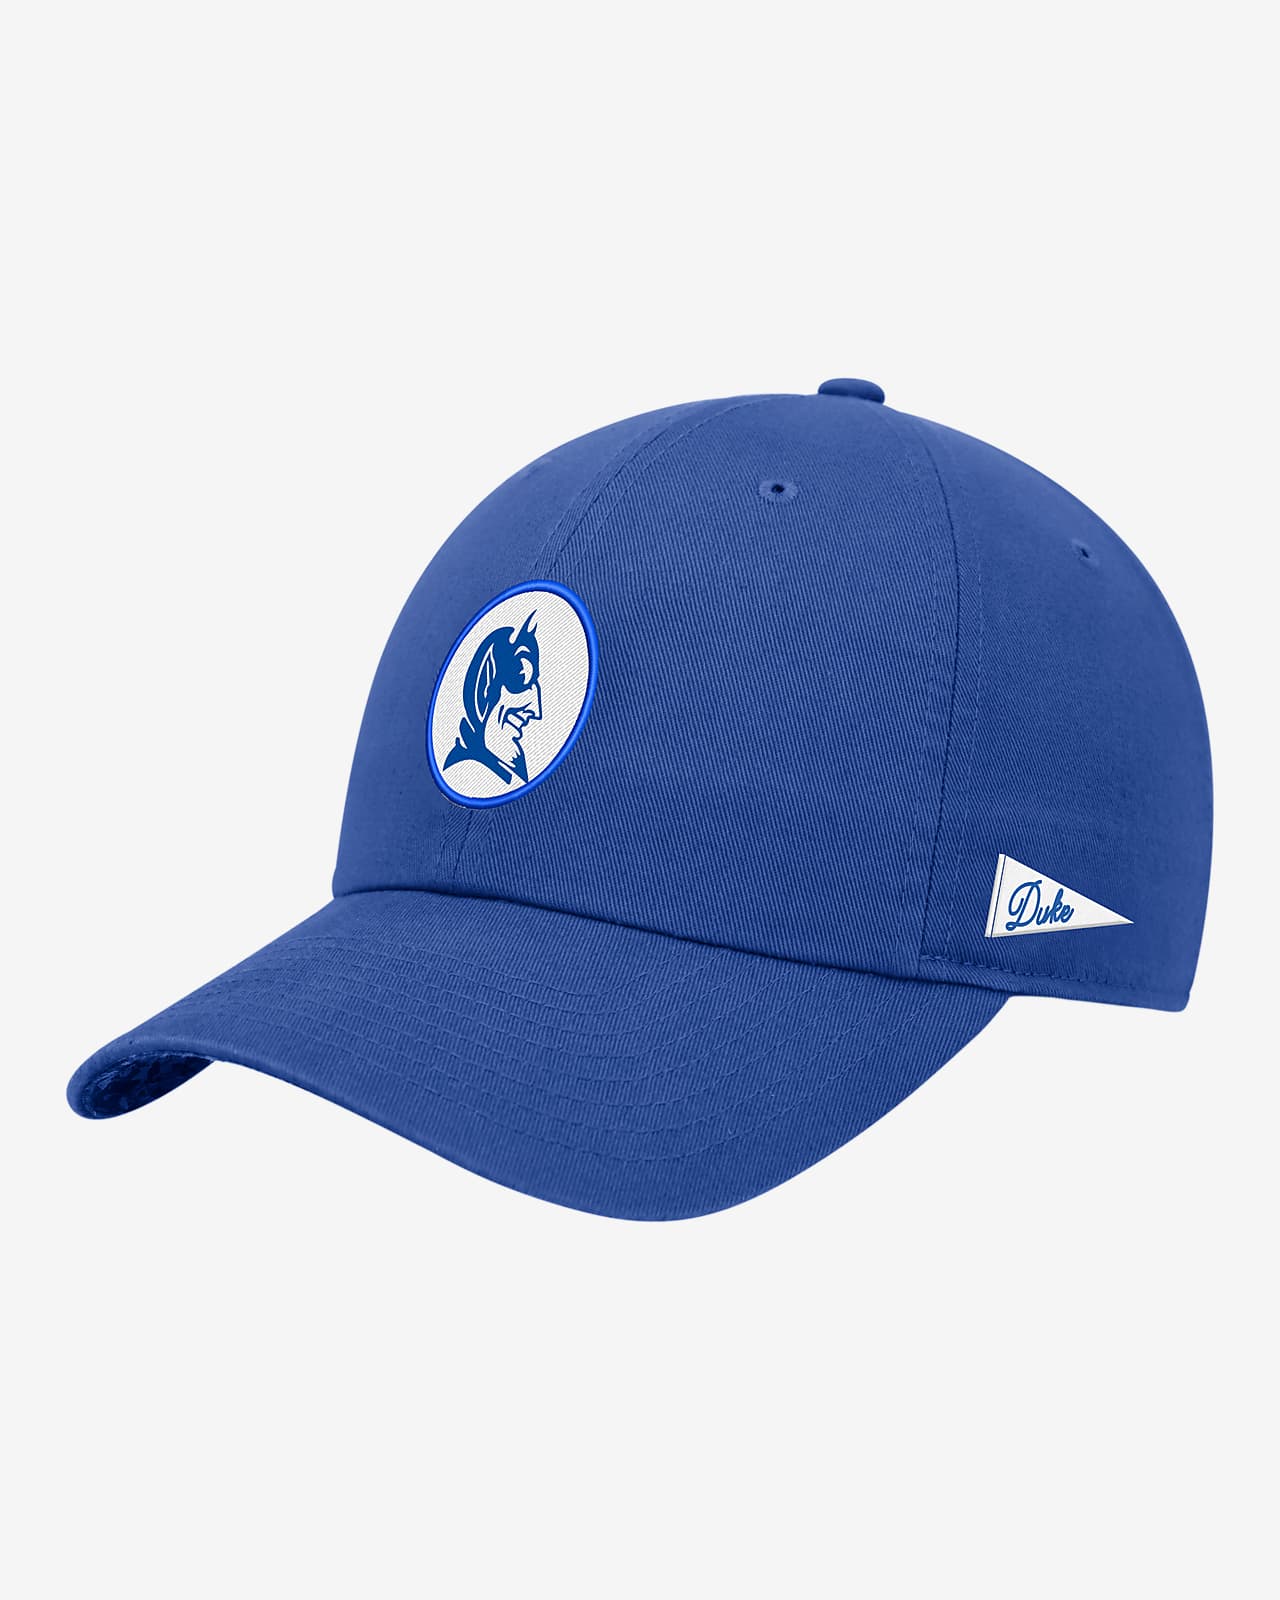 Gorra universitaria Nike ajustable con logotipo de Duke